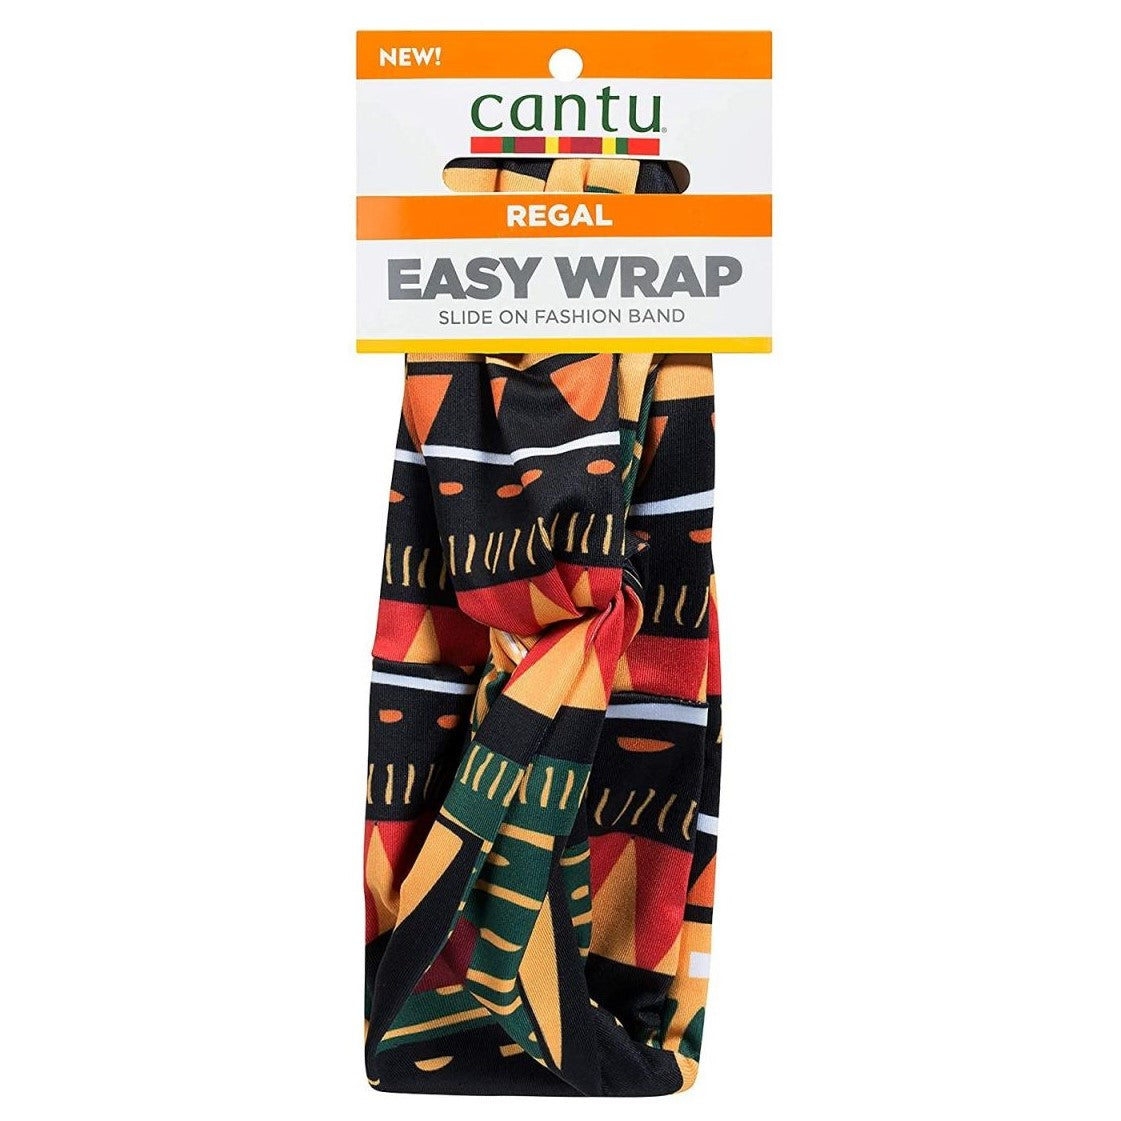 Cantu Regal Easy Wrap glid på modeband